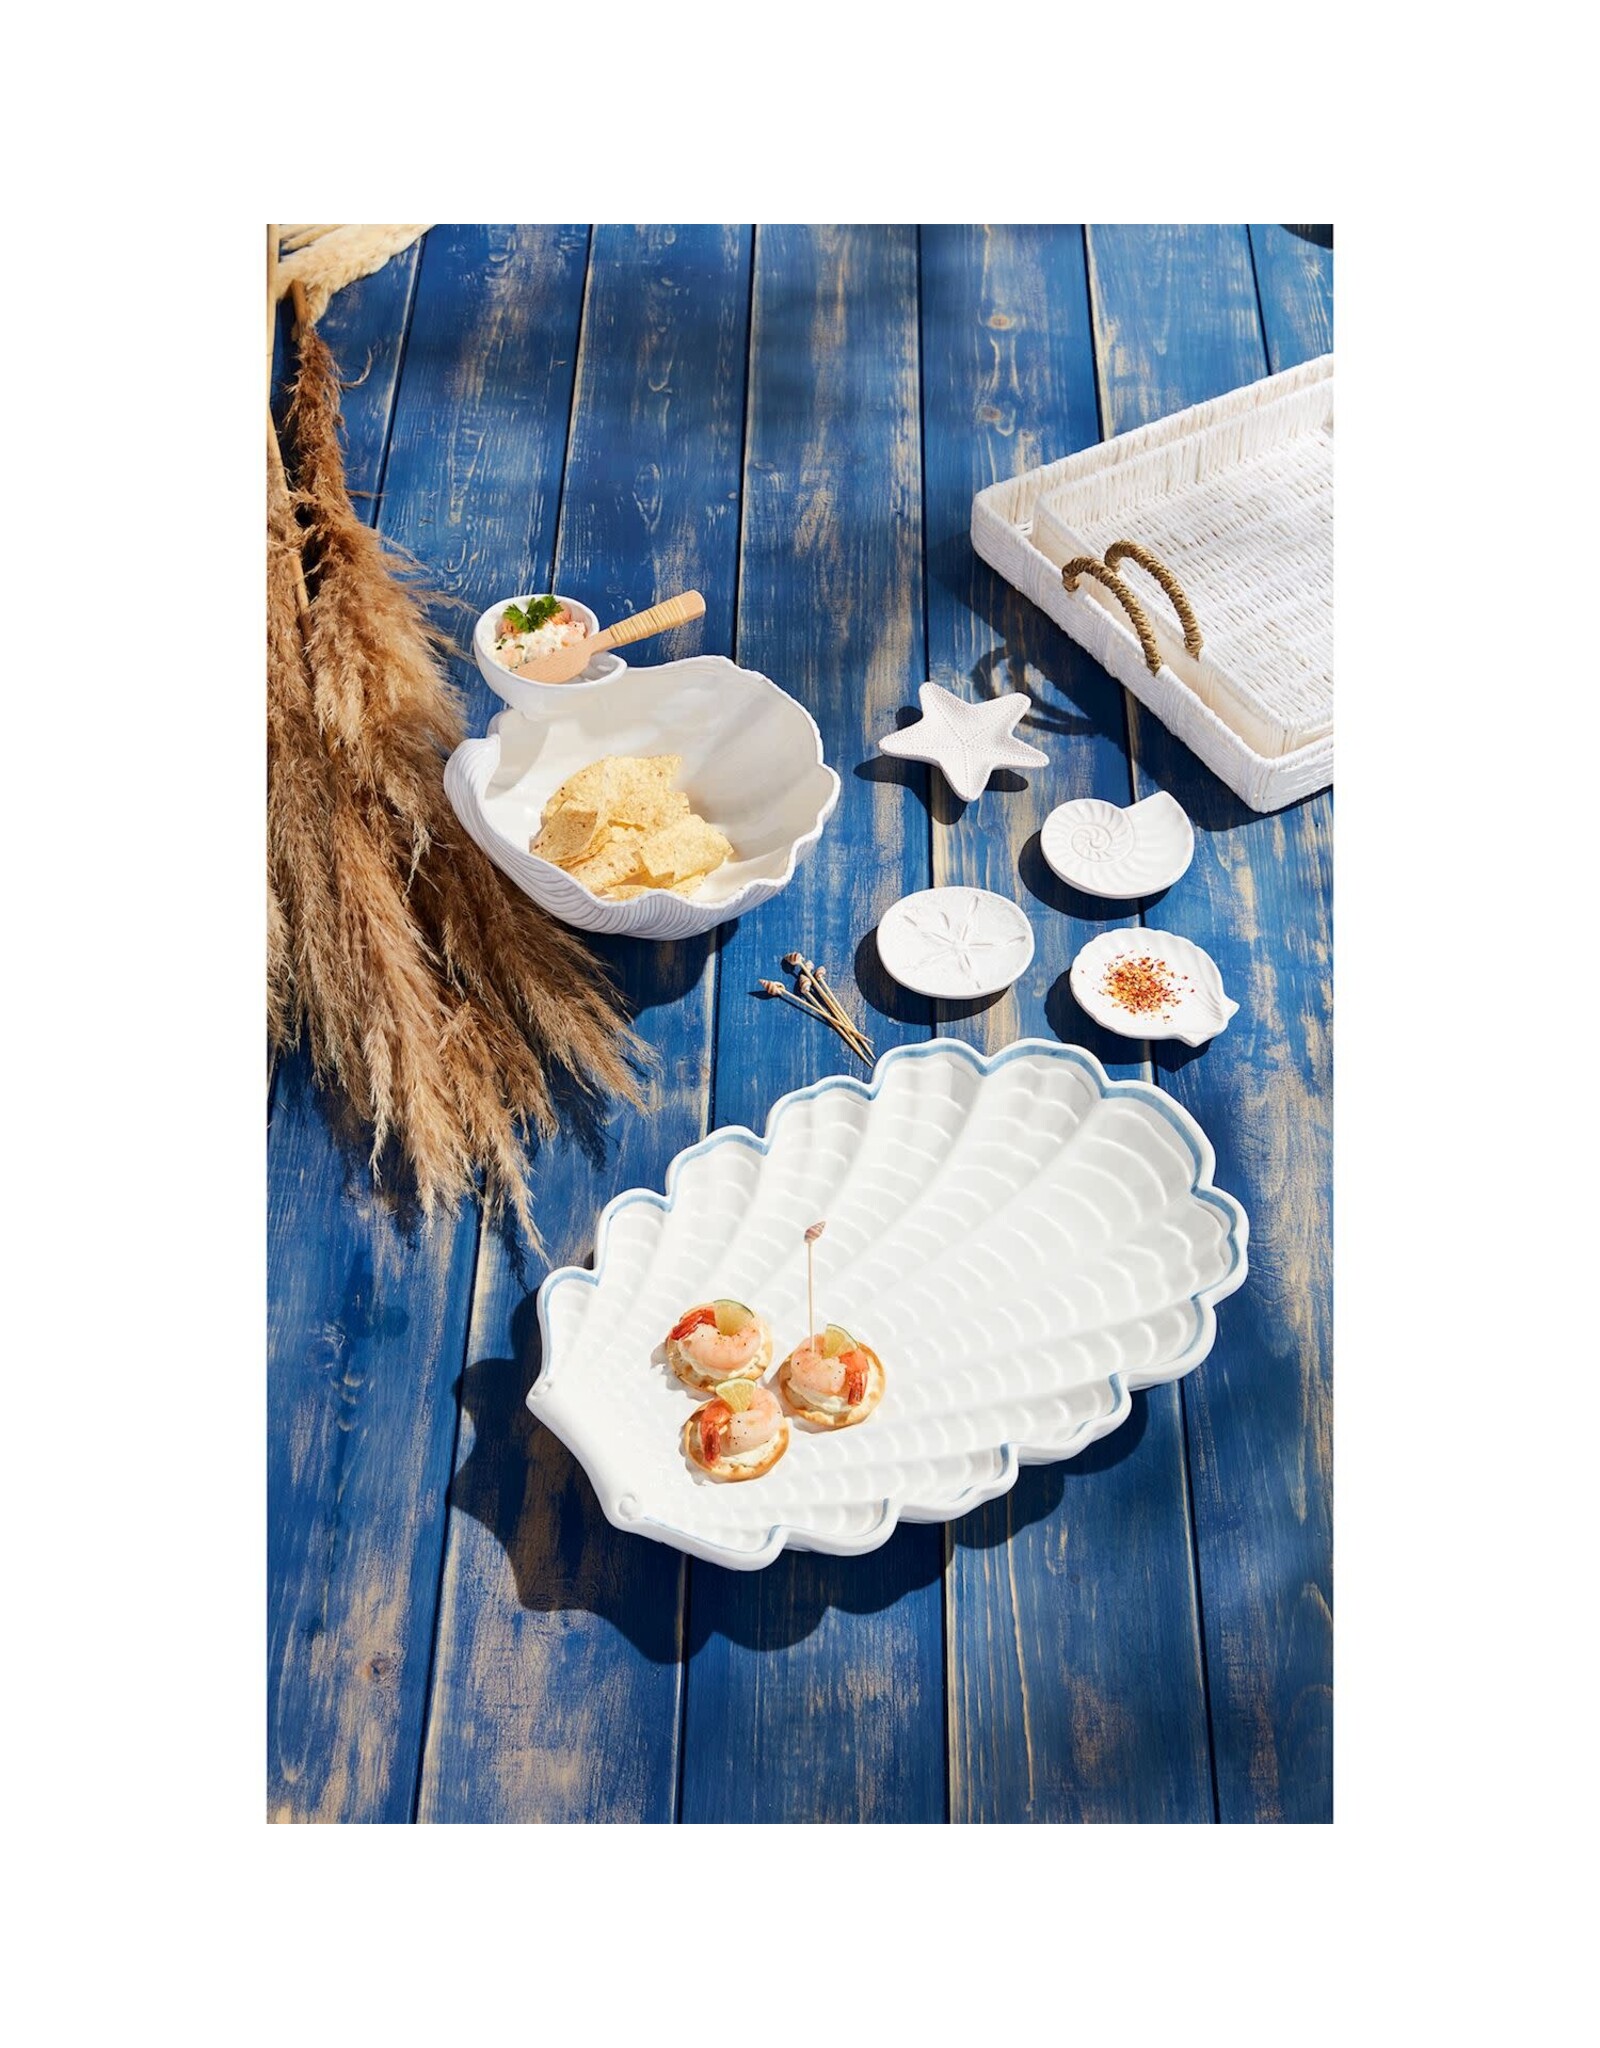 Mud Pie Sea Theme Tidbit Plates | Nautilus Swirl Shell Appetizer Plate